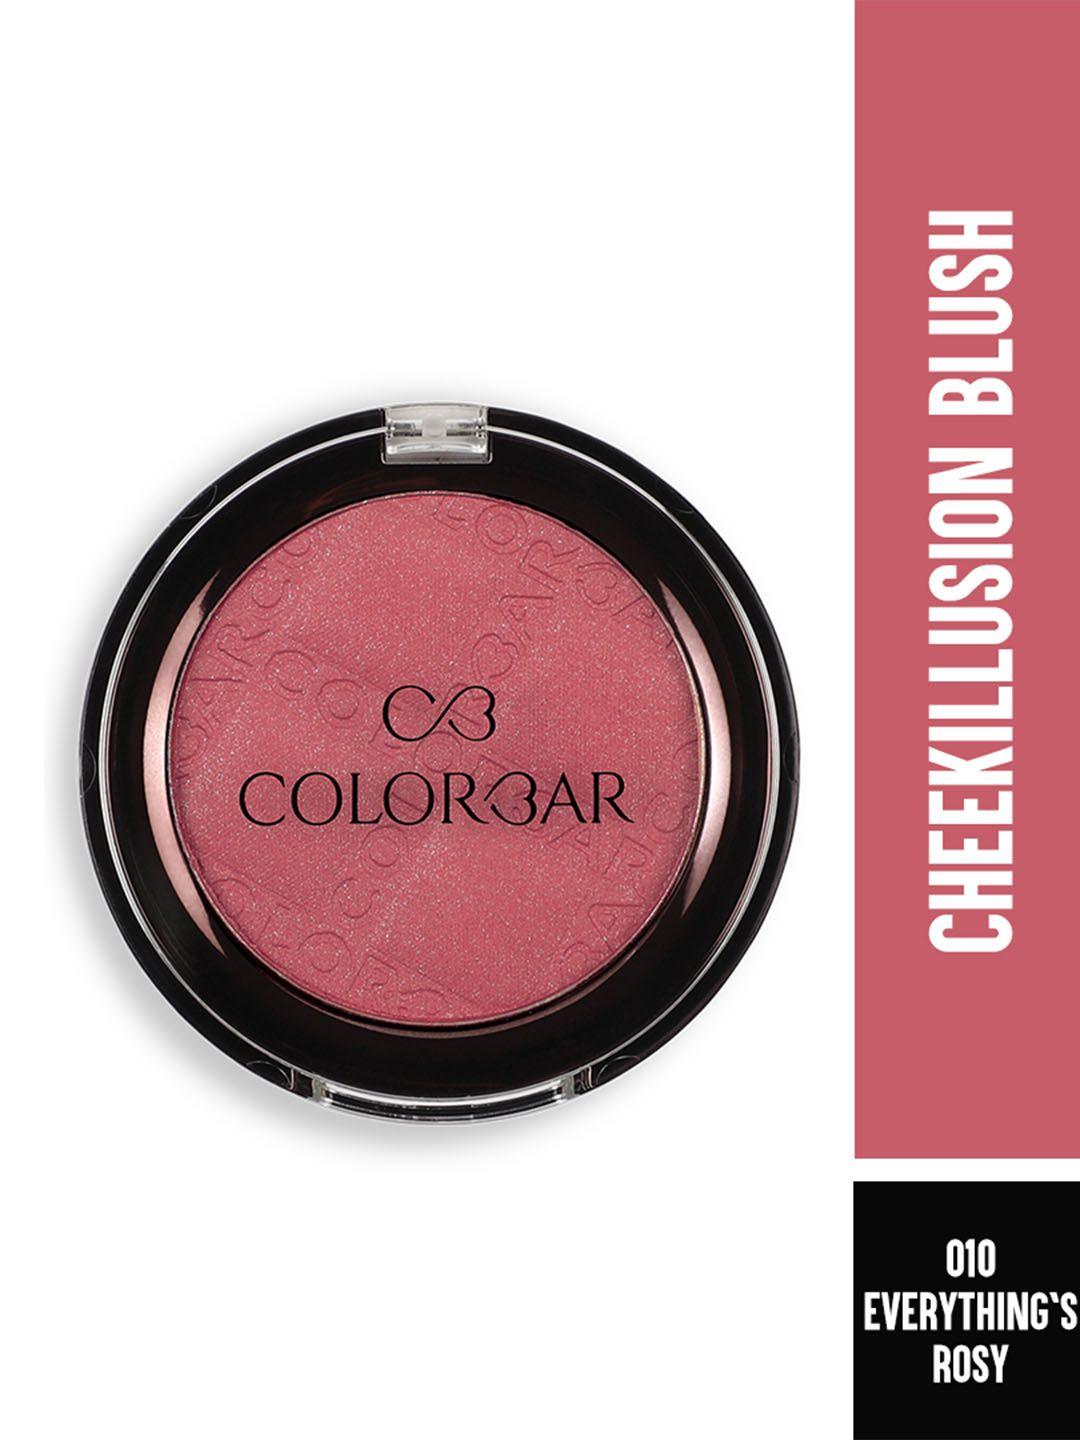 colorbar cheekillusion blush 6 g- everything's rosy 010